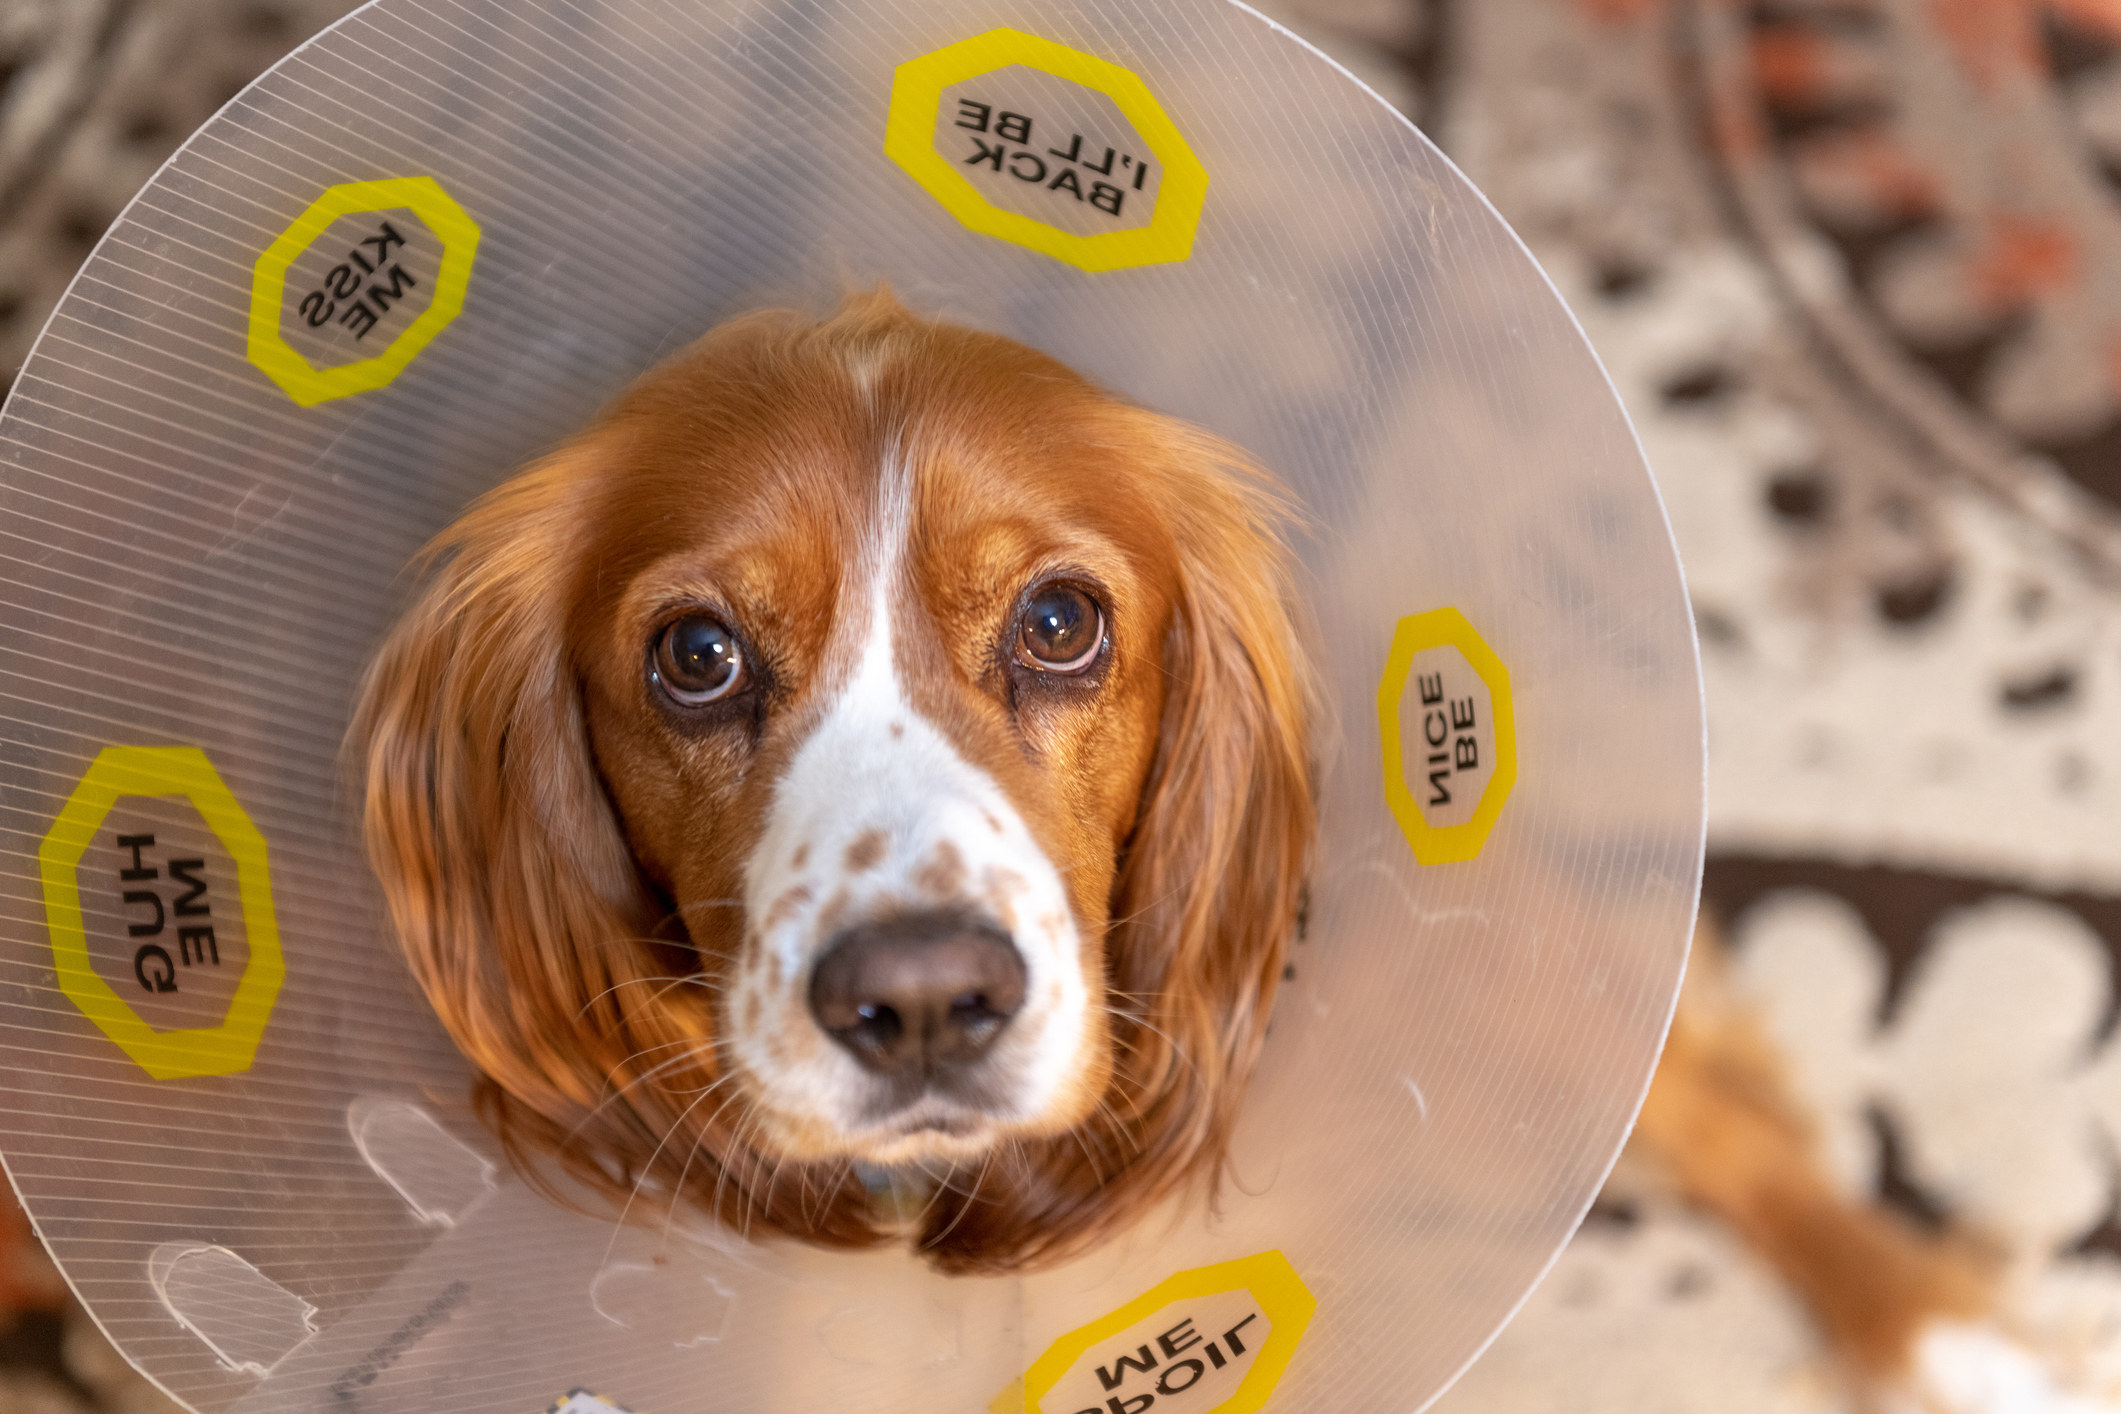 A sad dog wearing a cone